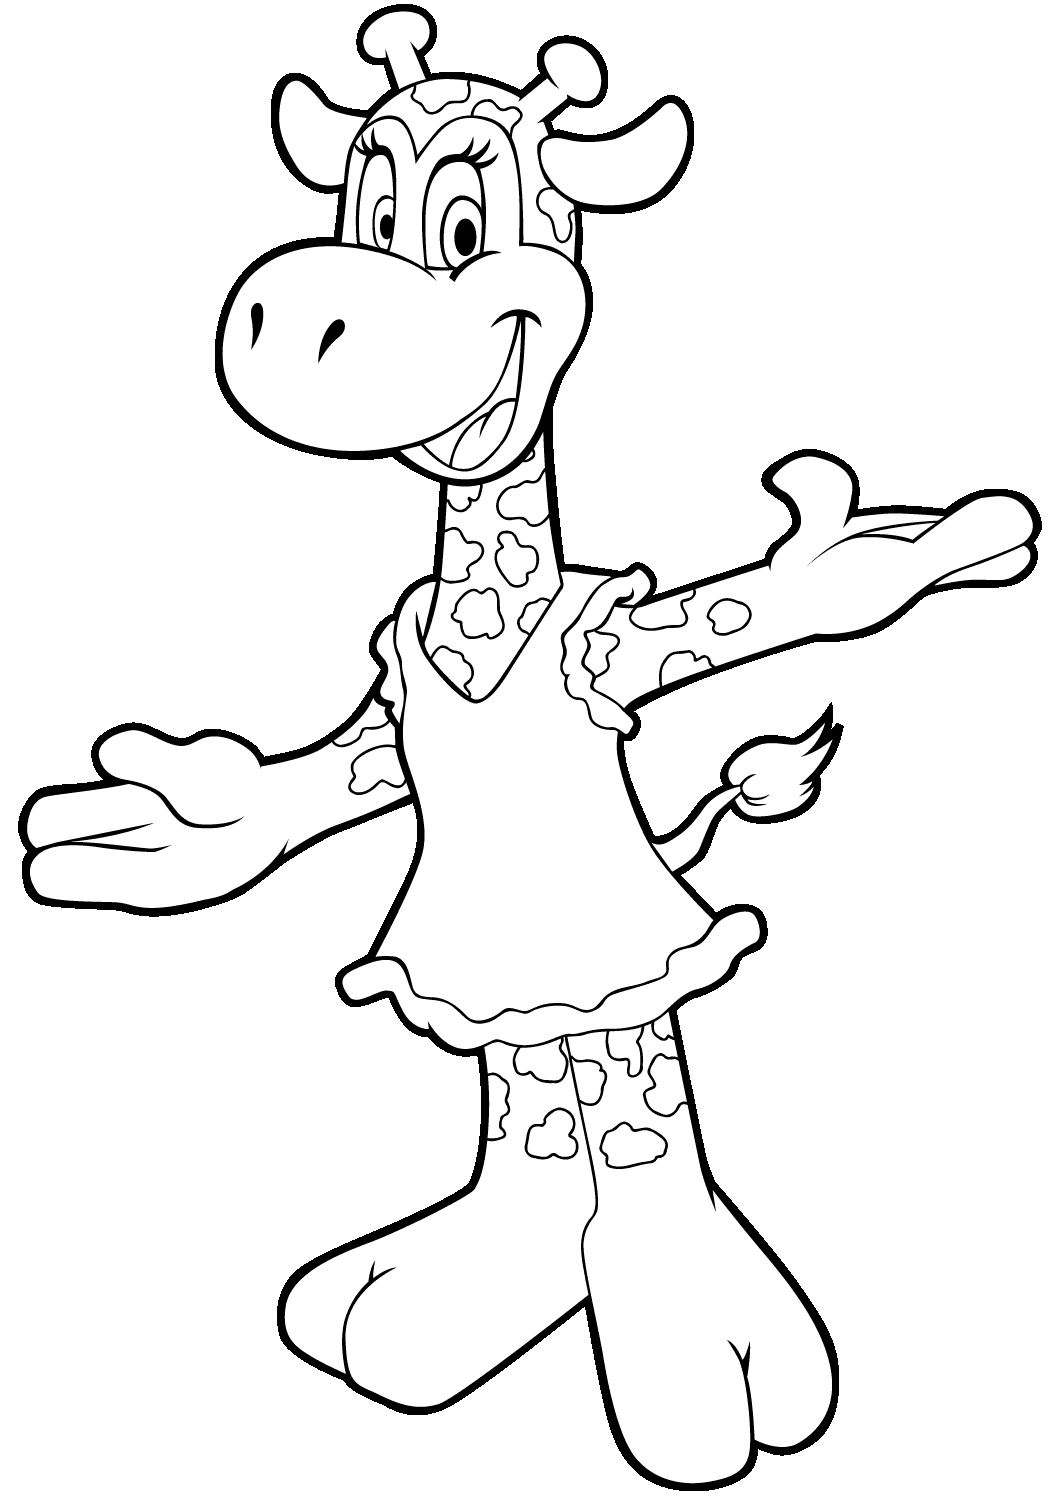 Fun Cartoon Giraffe Coloring Pages